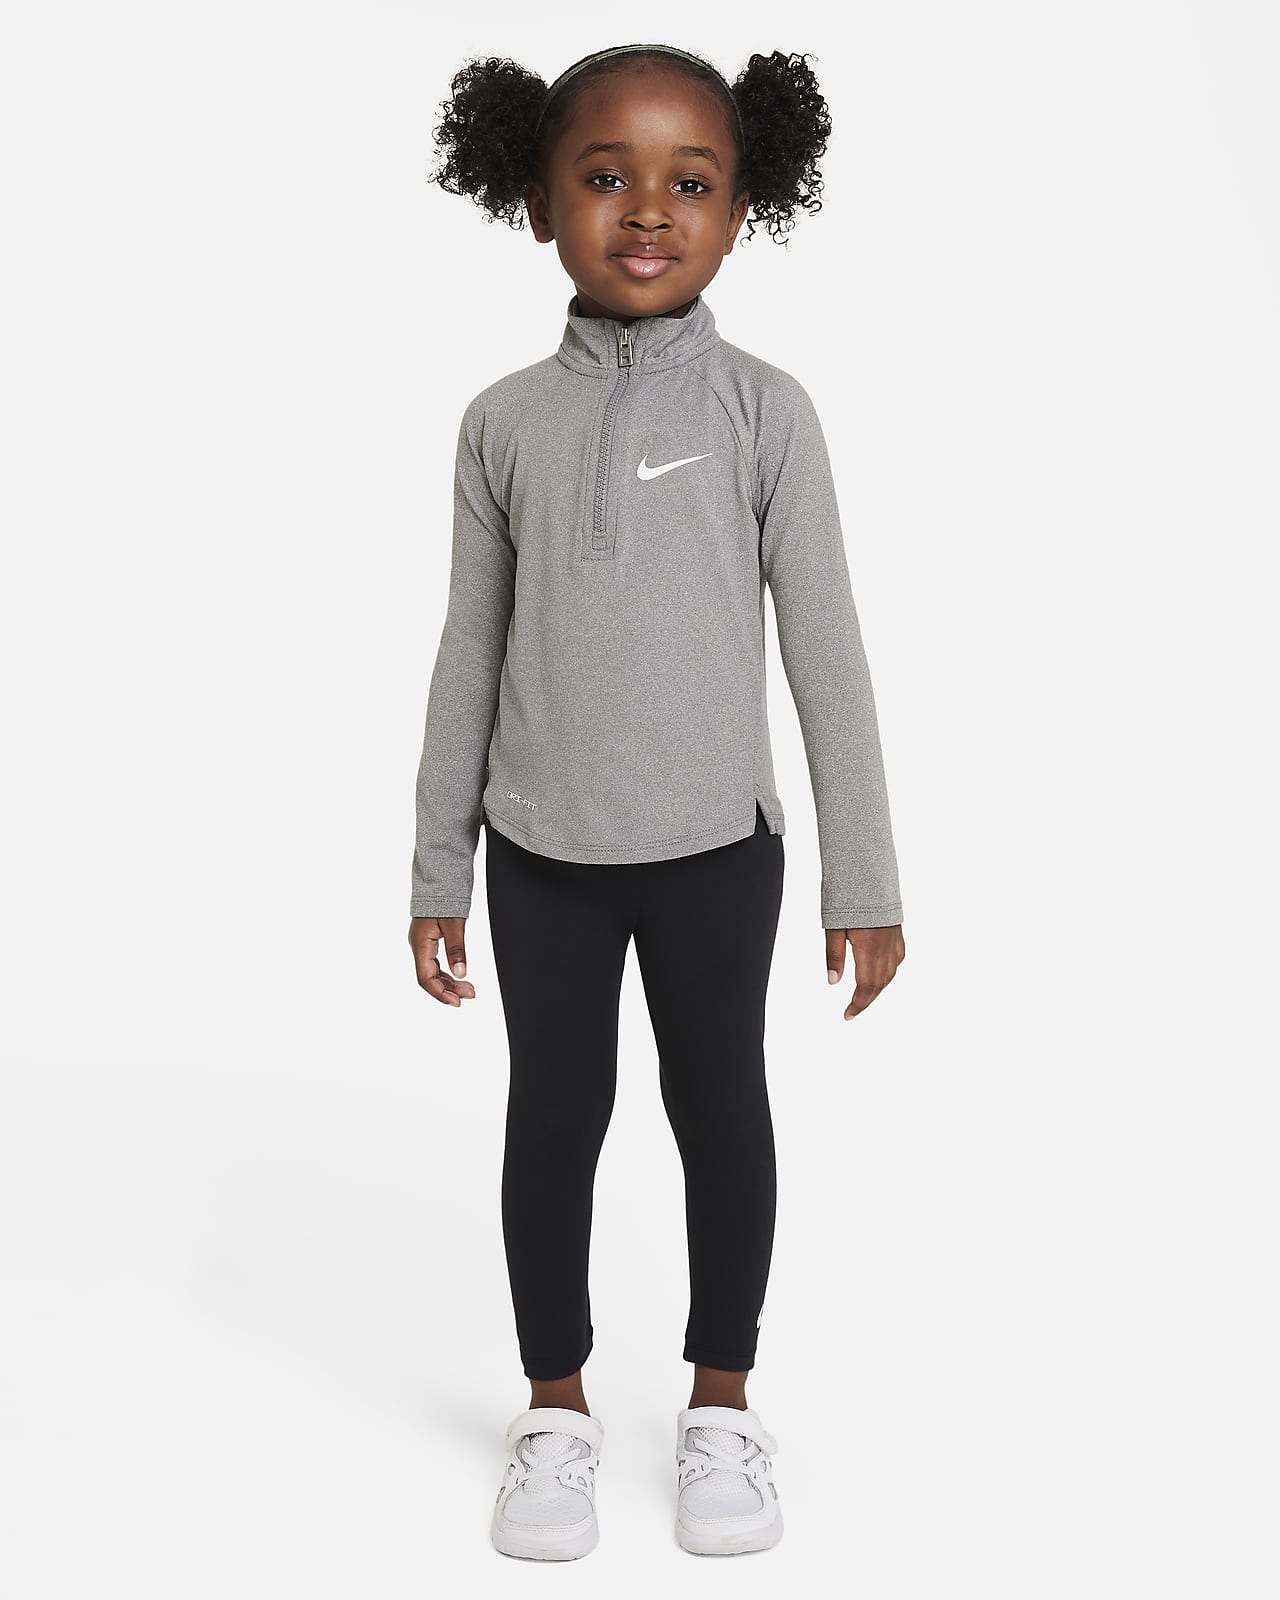 Nike Dri-FIT Mini Me Leggings Set Toddler, 43% OFF